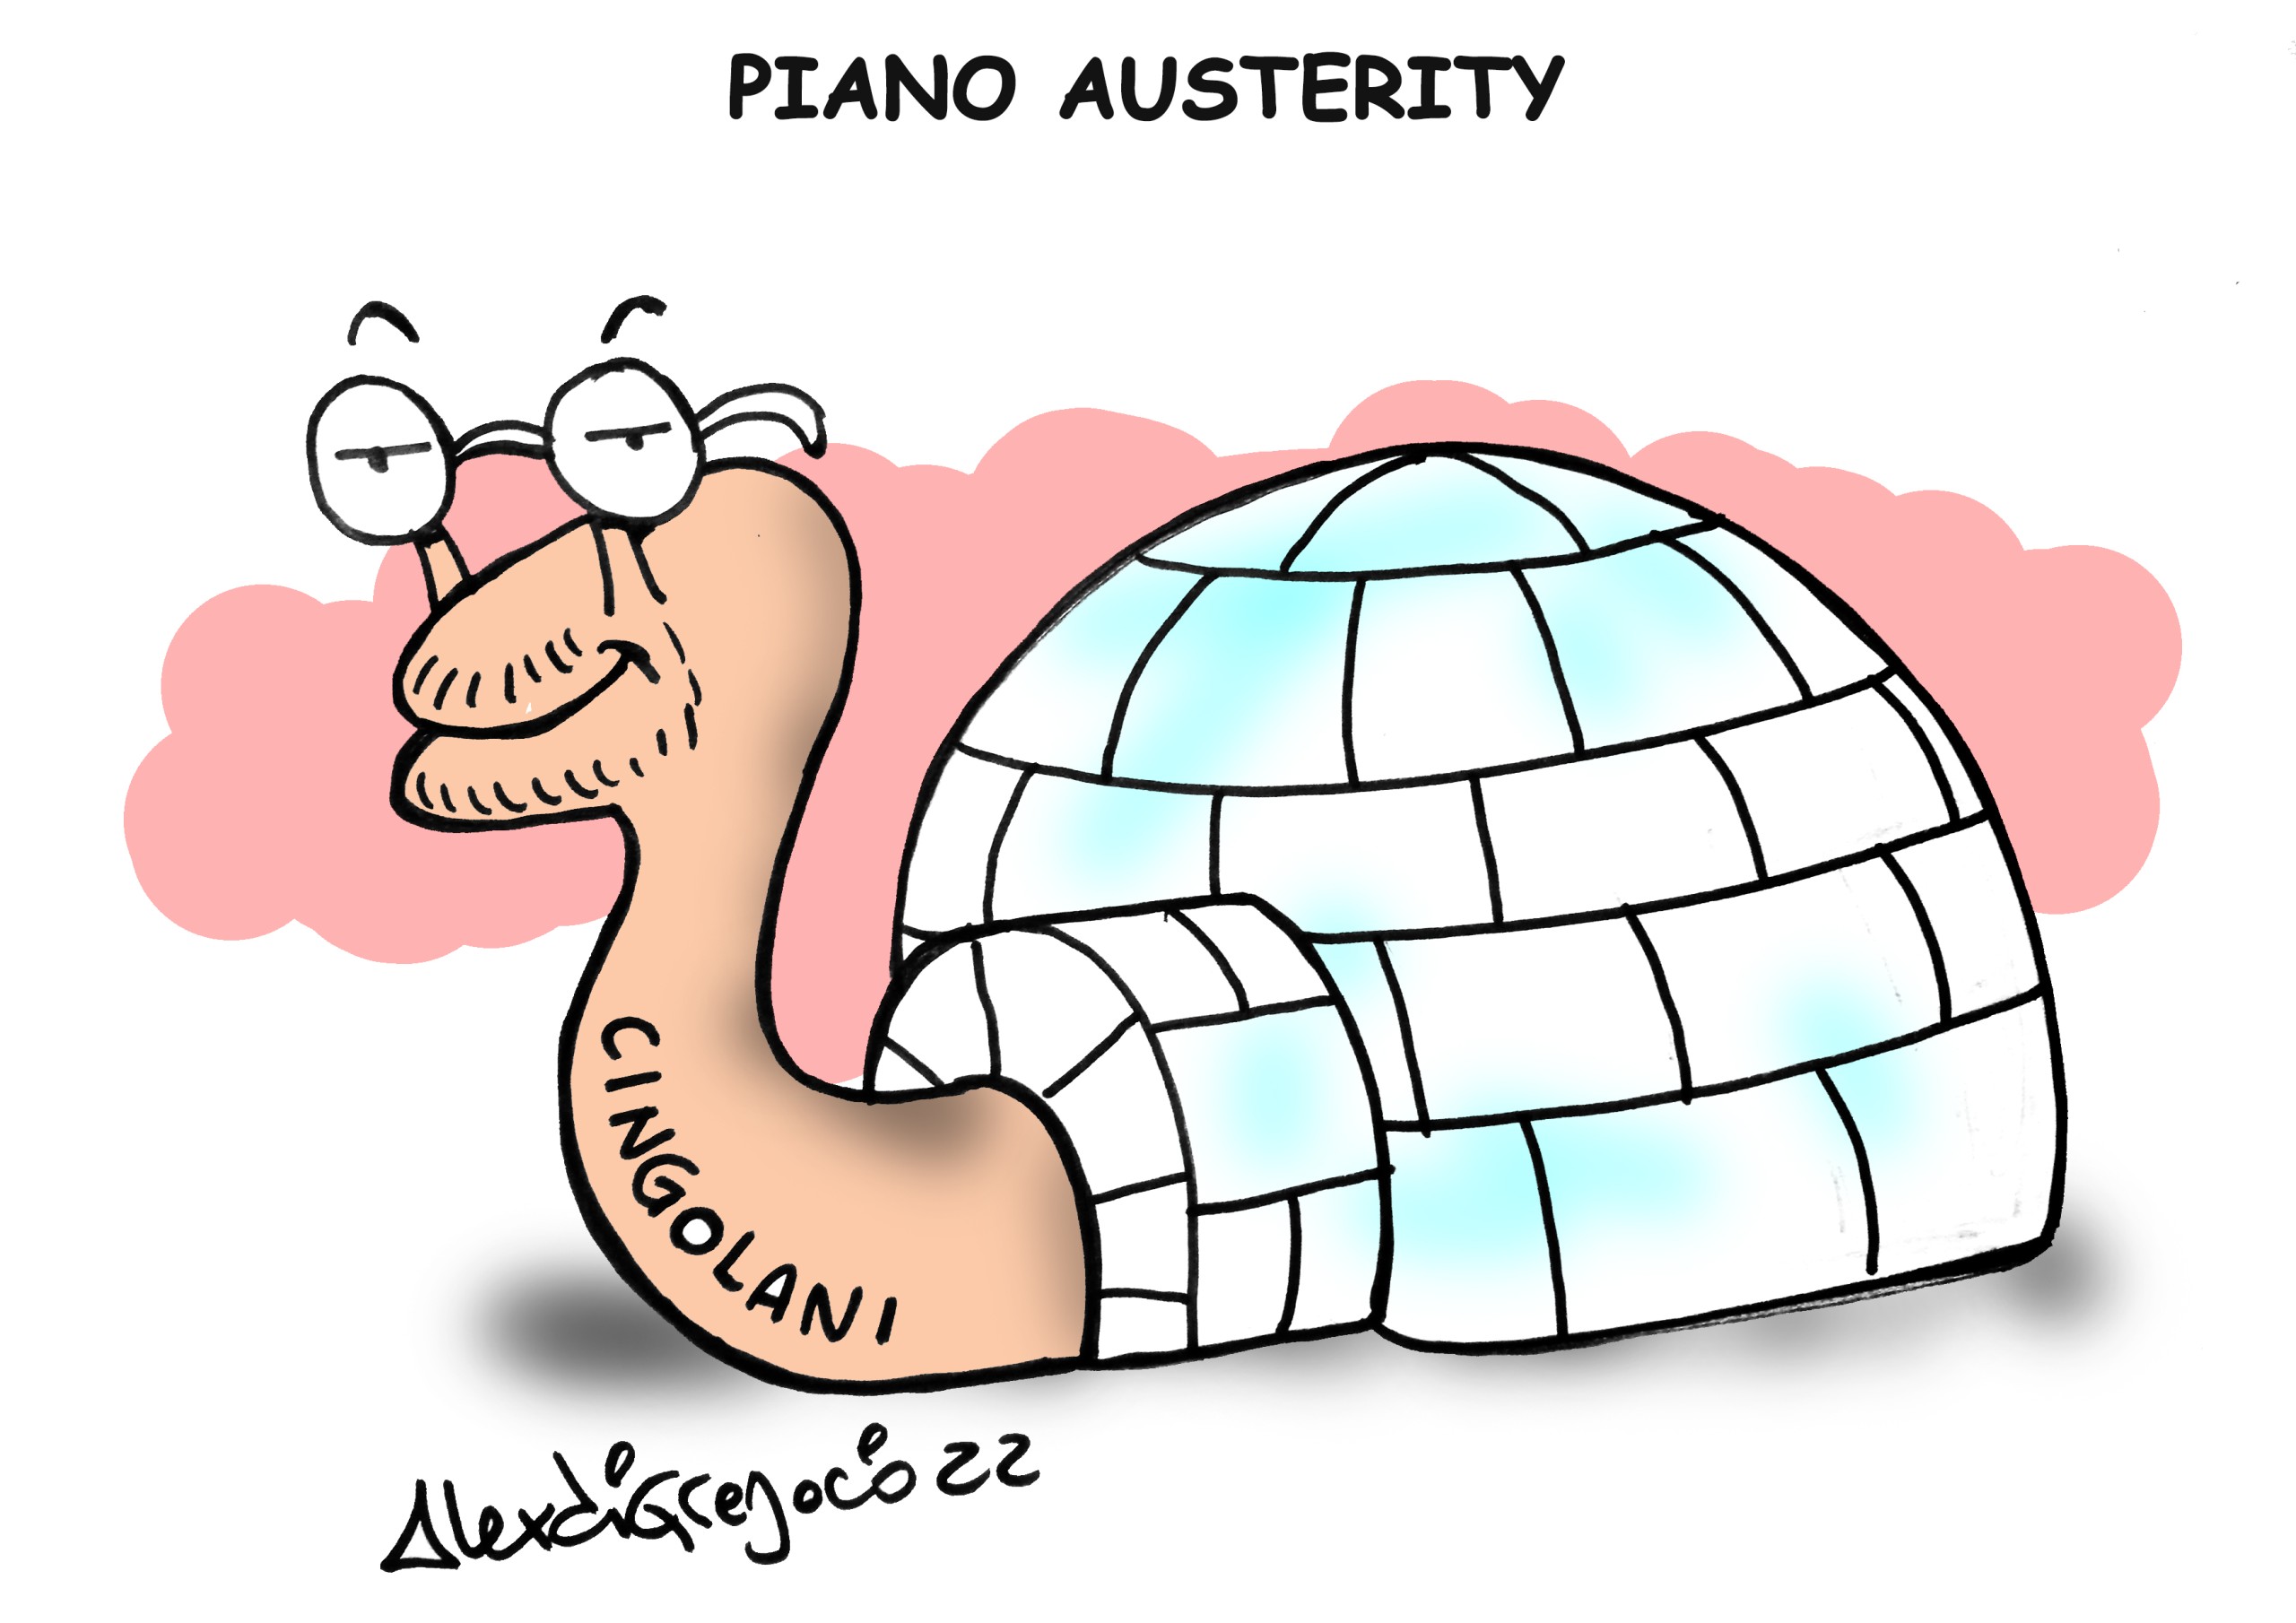 Piano austerity